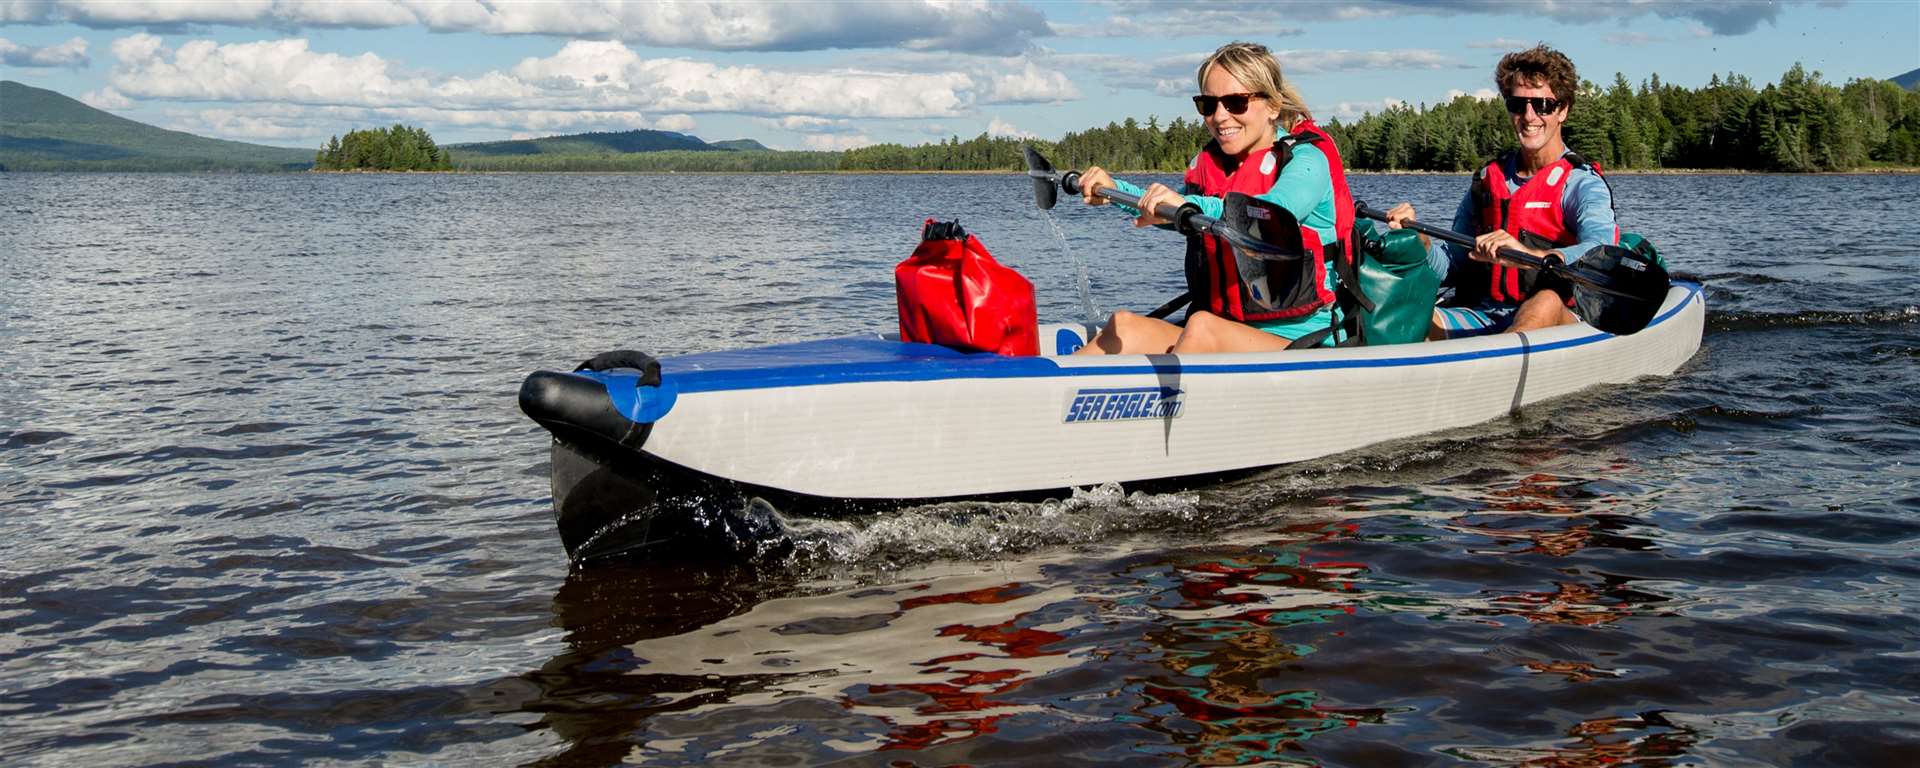 SeaEagle Inflatable Kayak Sea Eagle - 473RL 2 Person 15'6" White/Blue Inflatable Razorlite Kayak Pro Carbon Tandem Package ( 473RLK_PC )